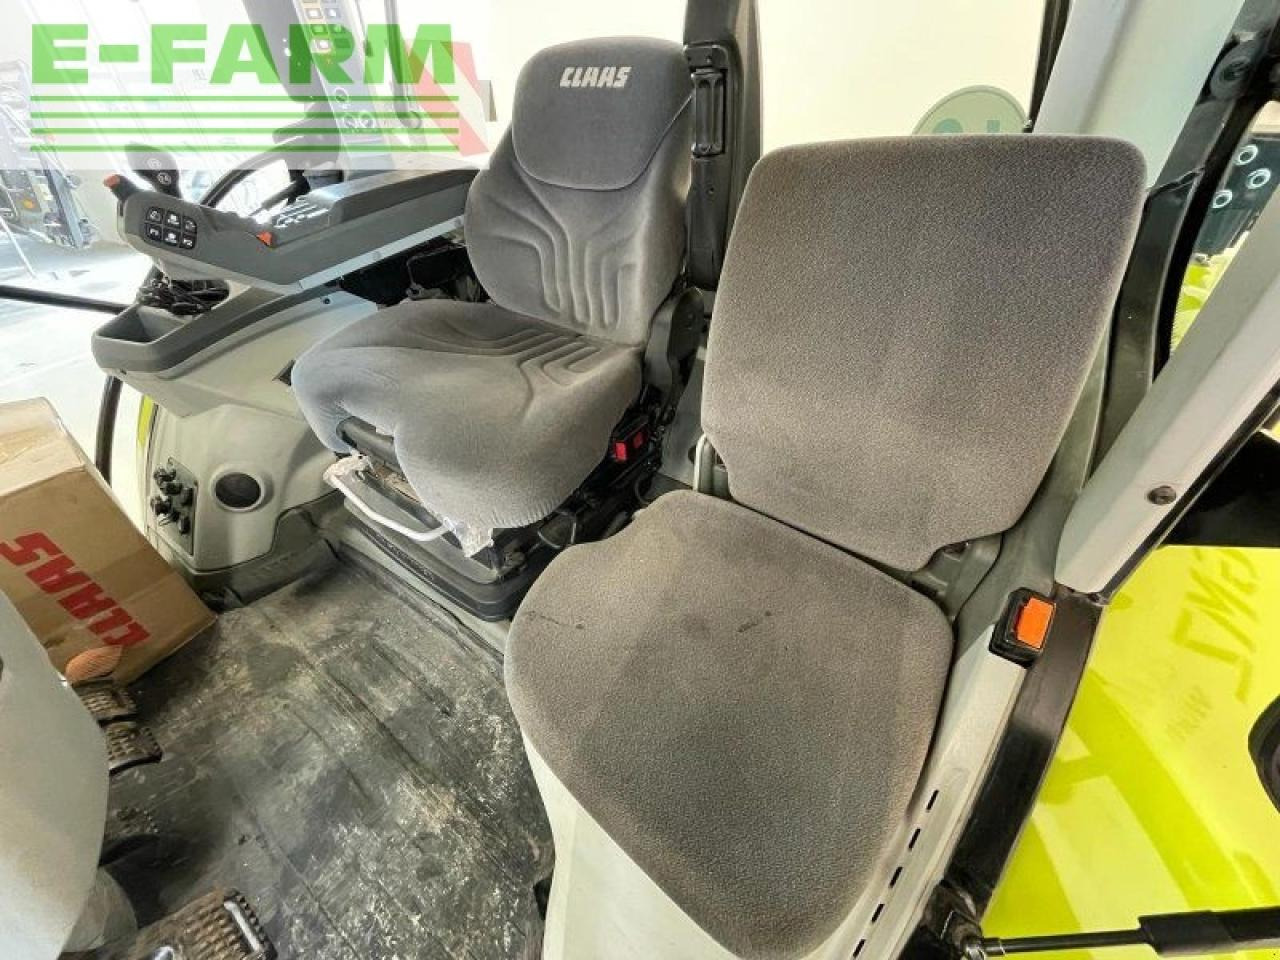 Farm tractor CLAAS arion 550 cis+